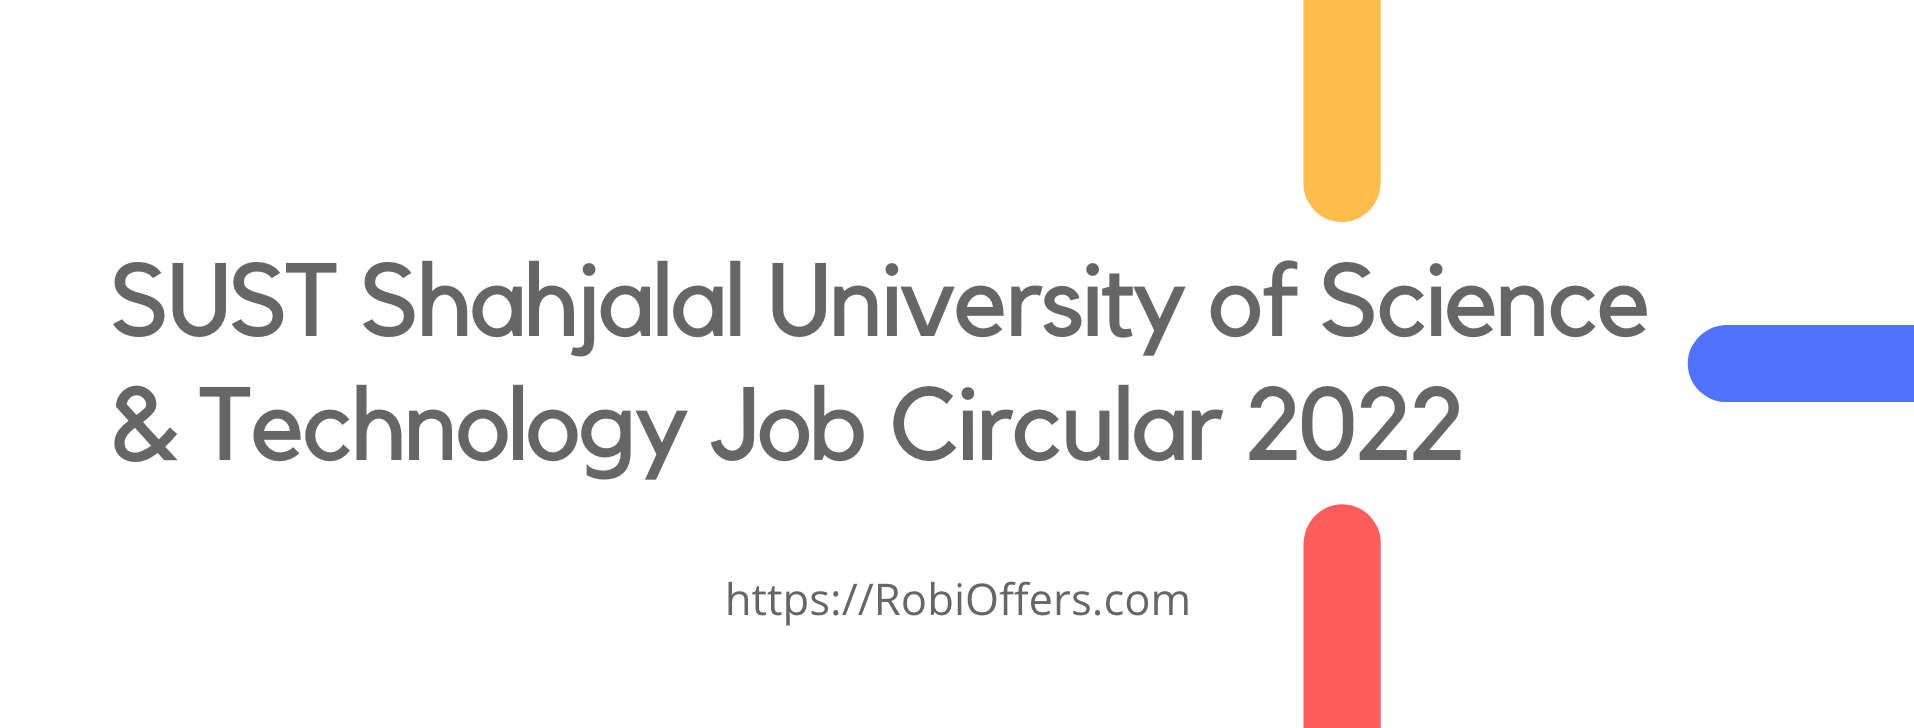 SUST Shahjalal University of Science and Technology Job Circular 2022